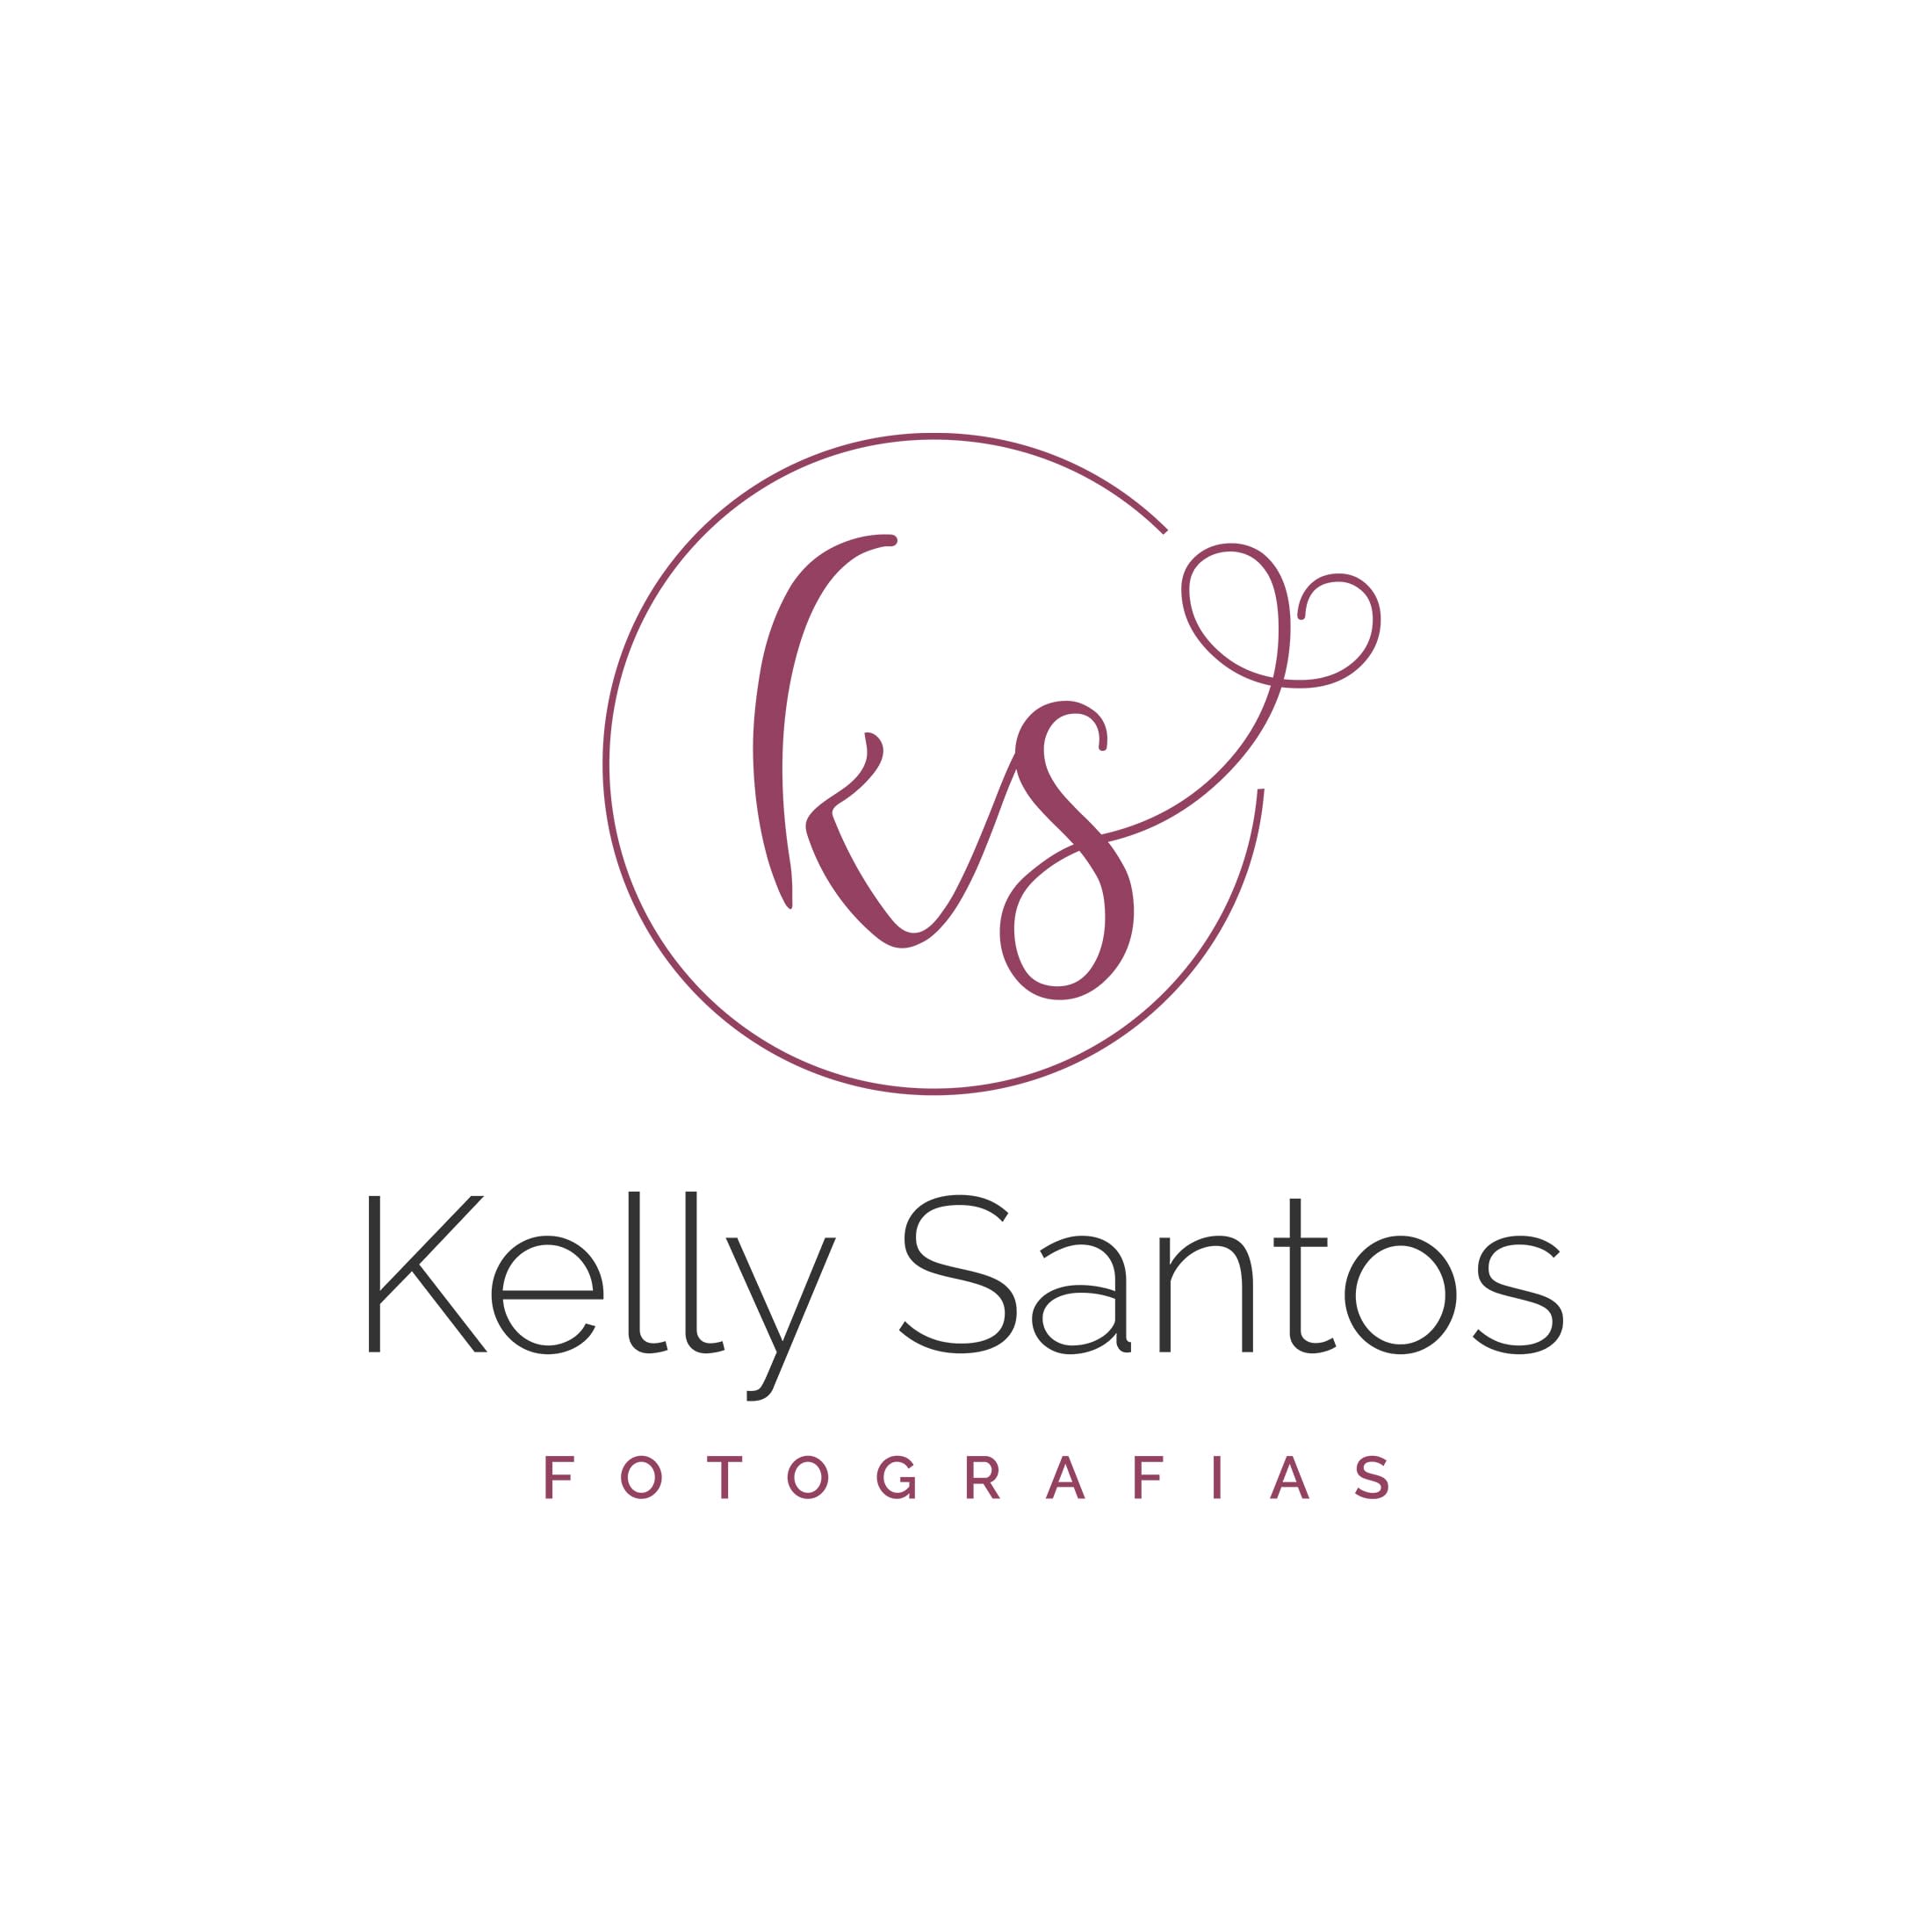 Kelly Santos Fotografias